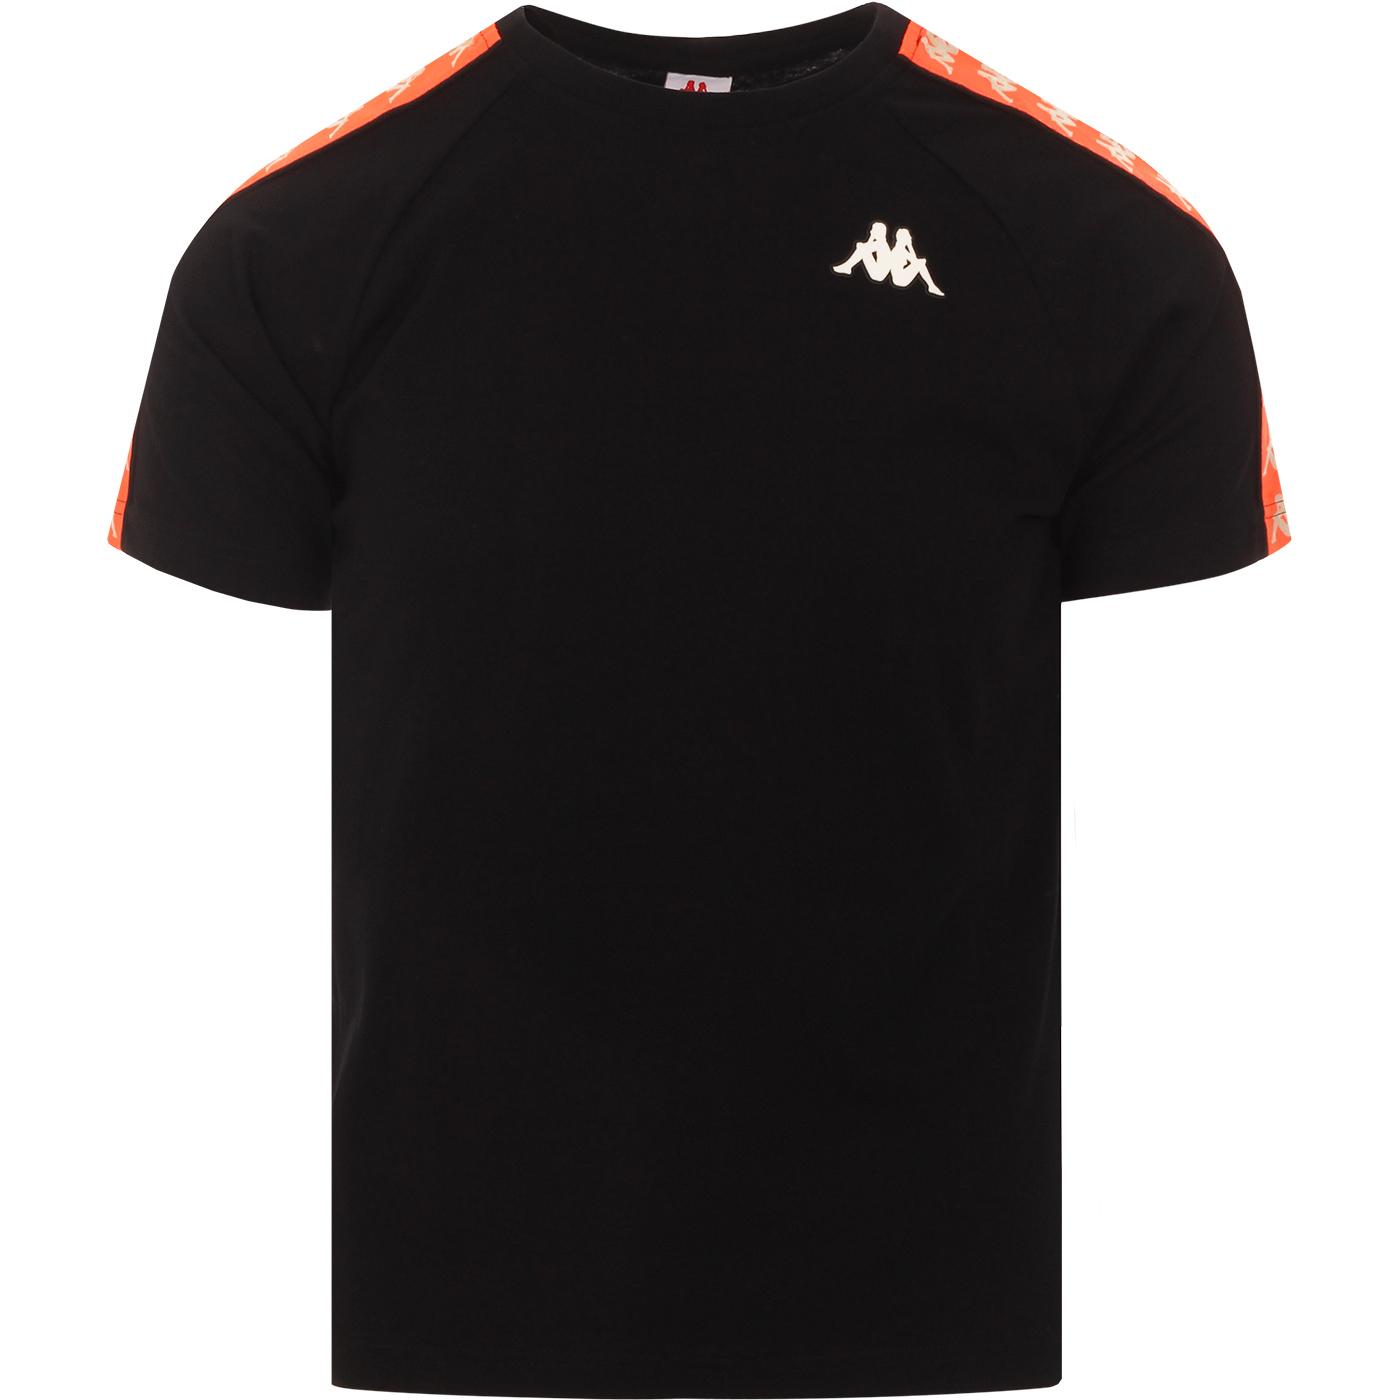 Coen KAPPA Retro 80s Taped Sleeve T-Shirt Black/Orange